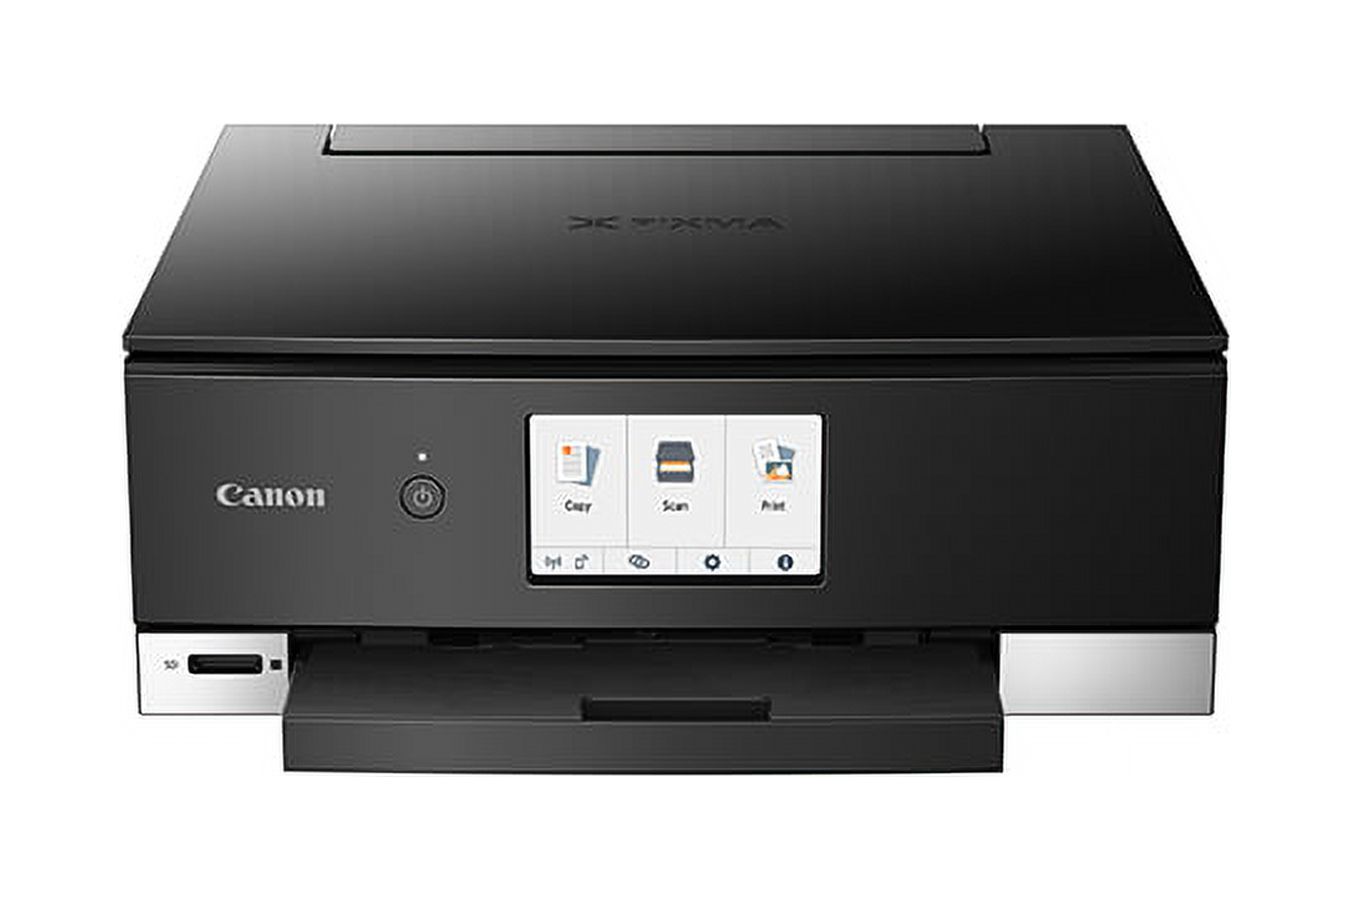 Canon PIXMA TS8220 Black Wireless Inkjet All-In-One Printer - image 1 of 9